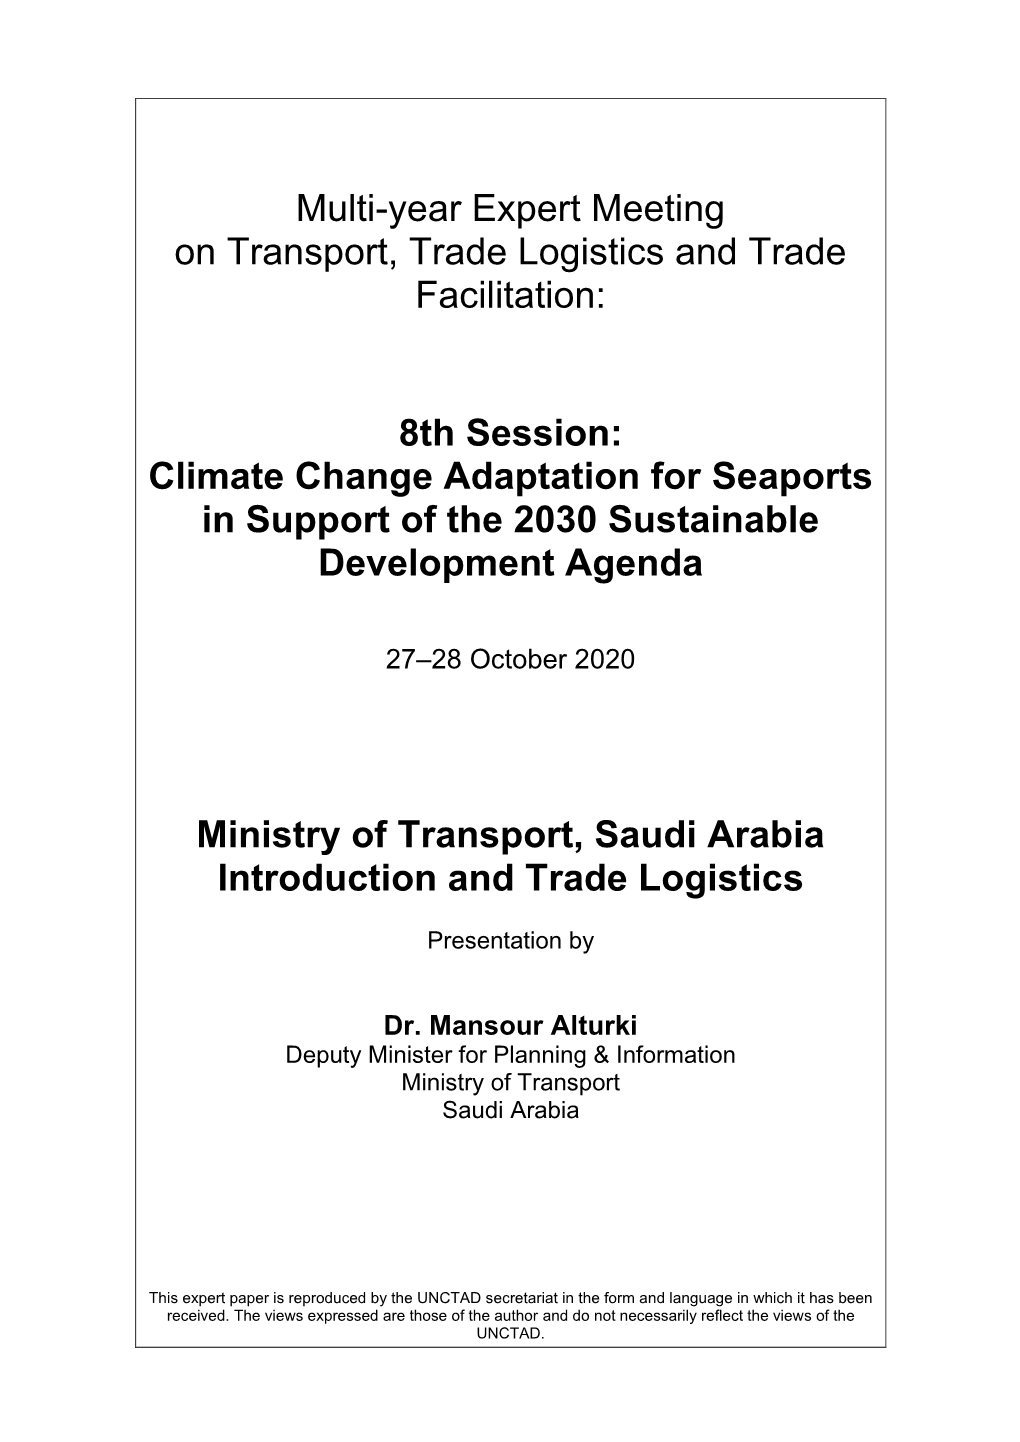 Ministry of Transportation, Saudi Arabia